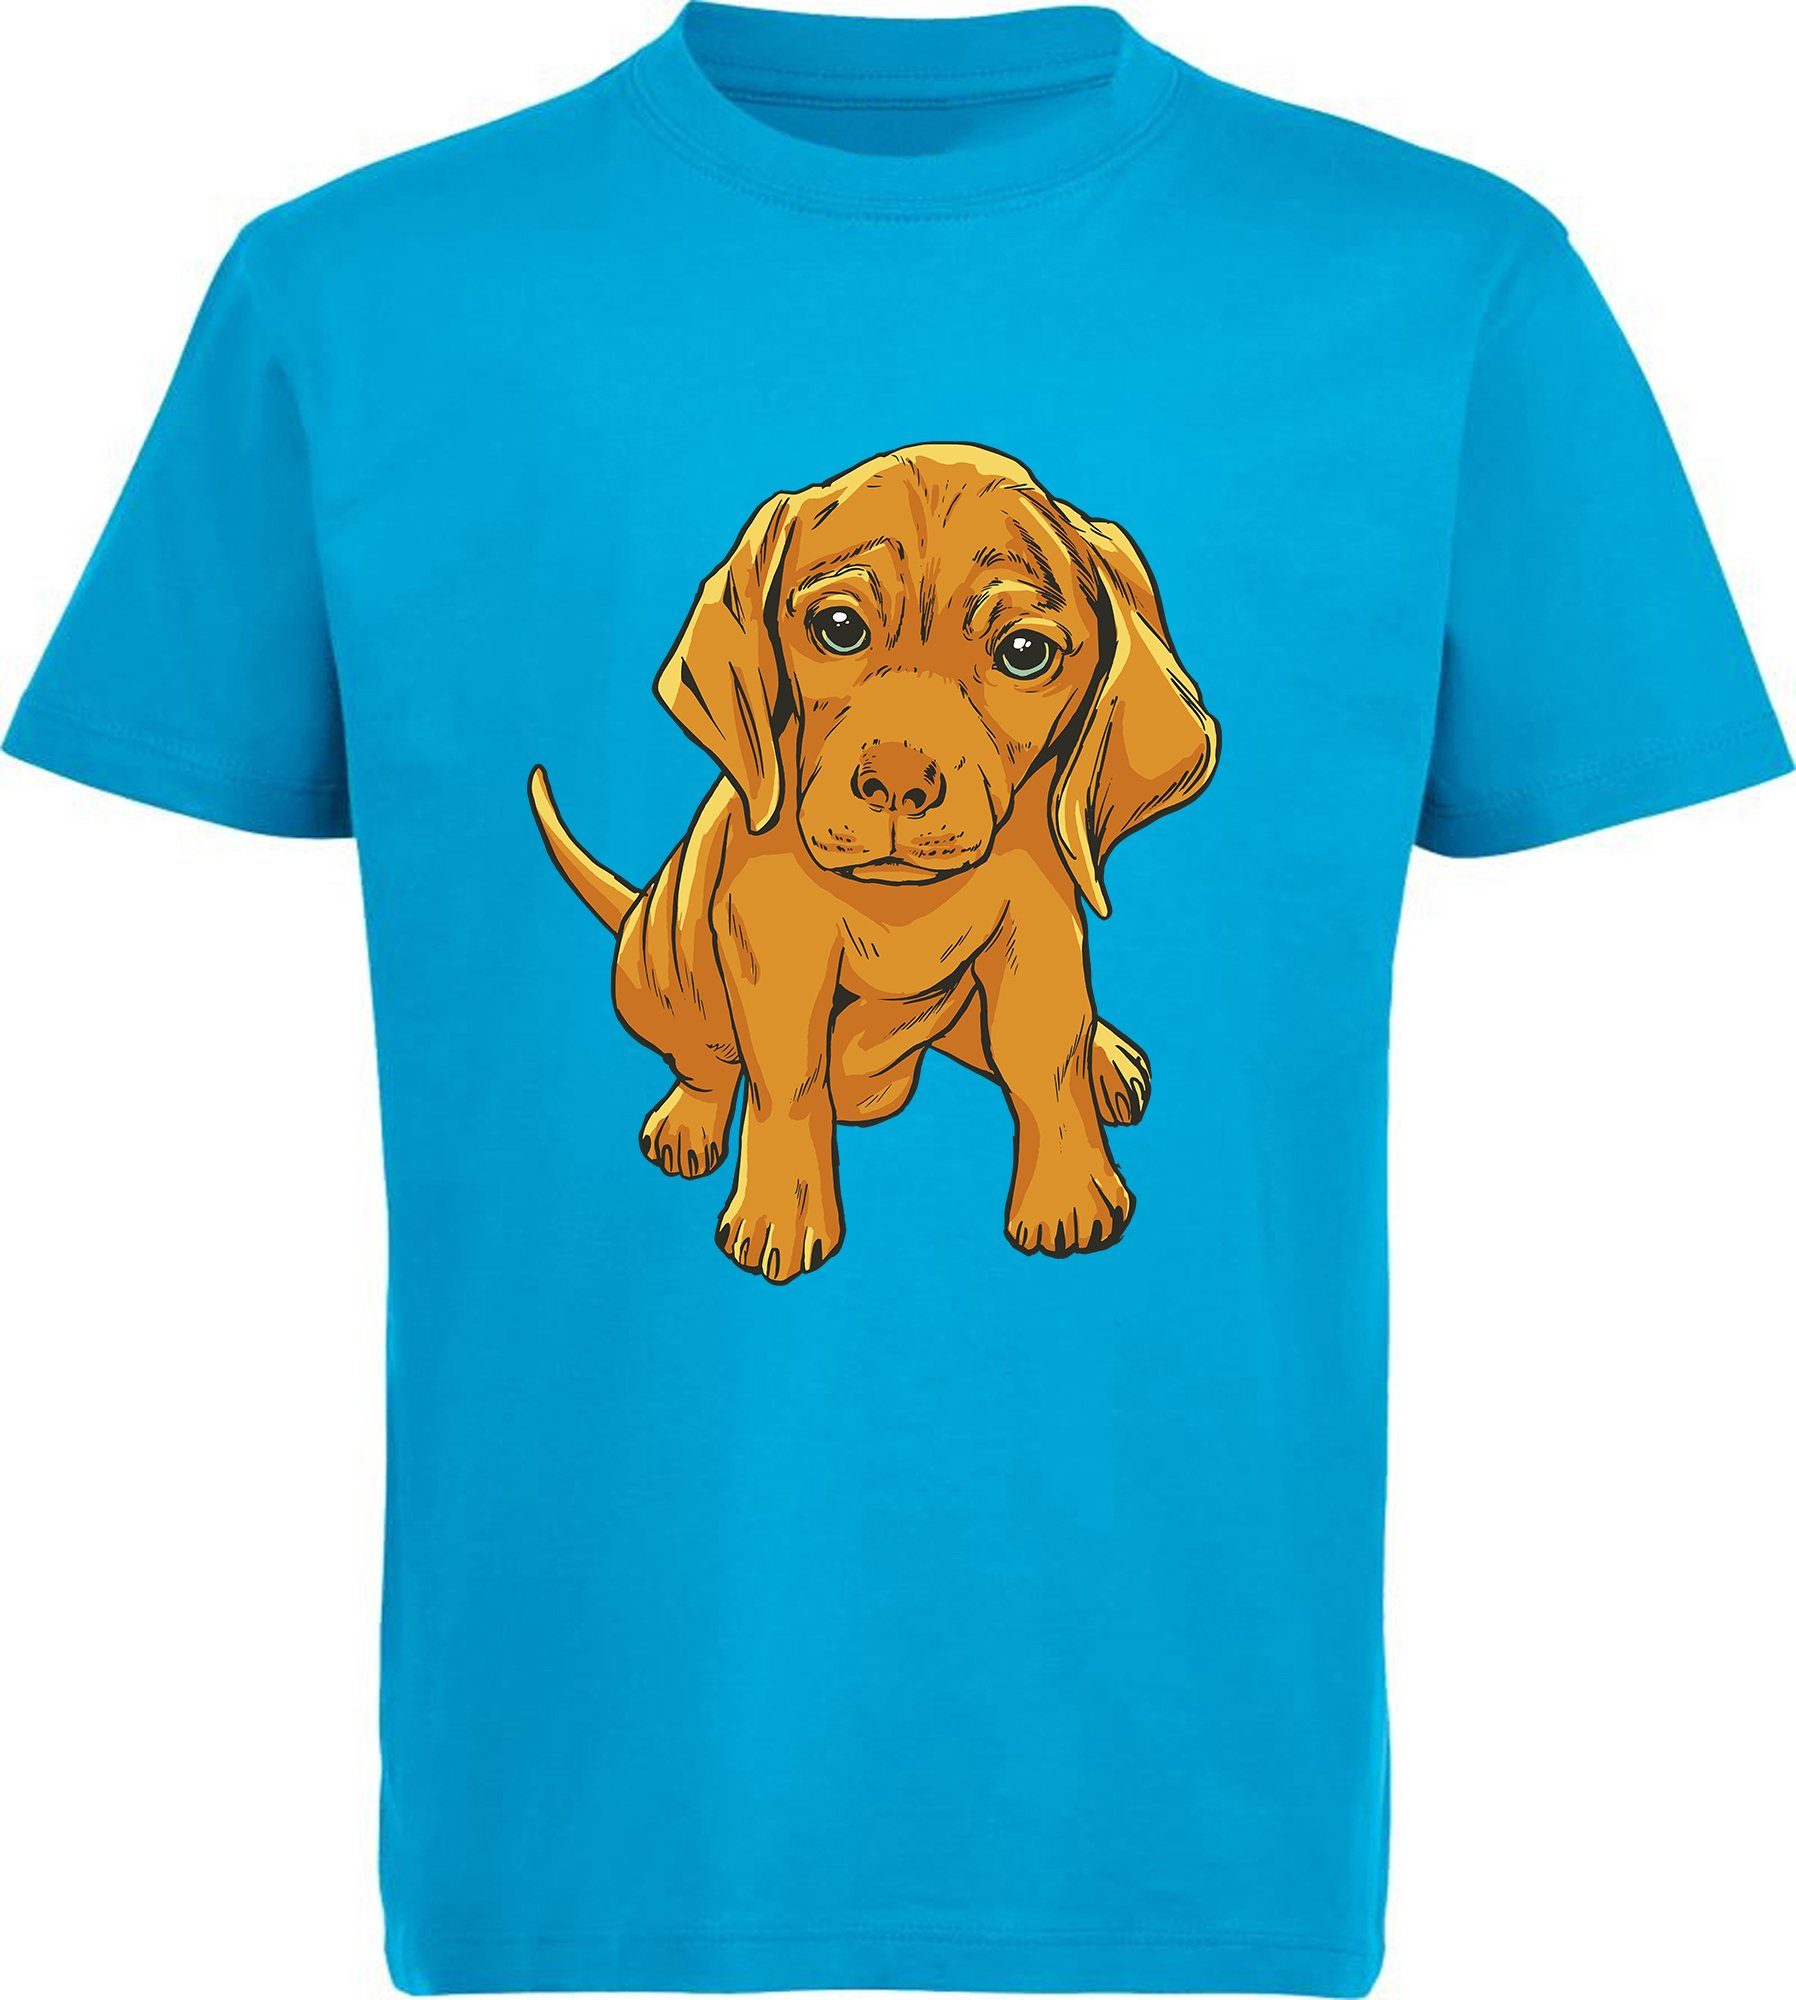 MyDesign24 Print-Shirt Kinder Hunde T-Shirt bedruckt - Süßer Welpe Baumwollshirt mit Aufdruck, i230 aqua blau